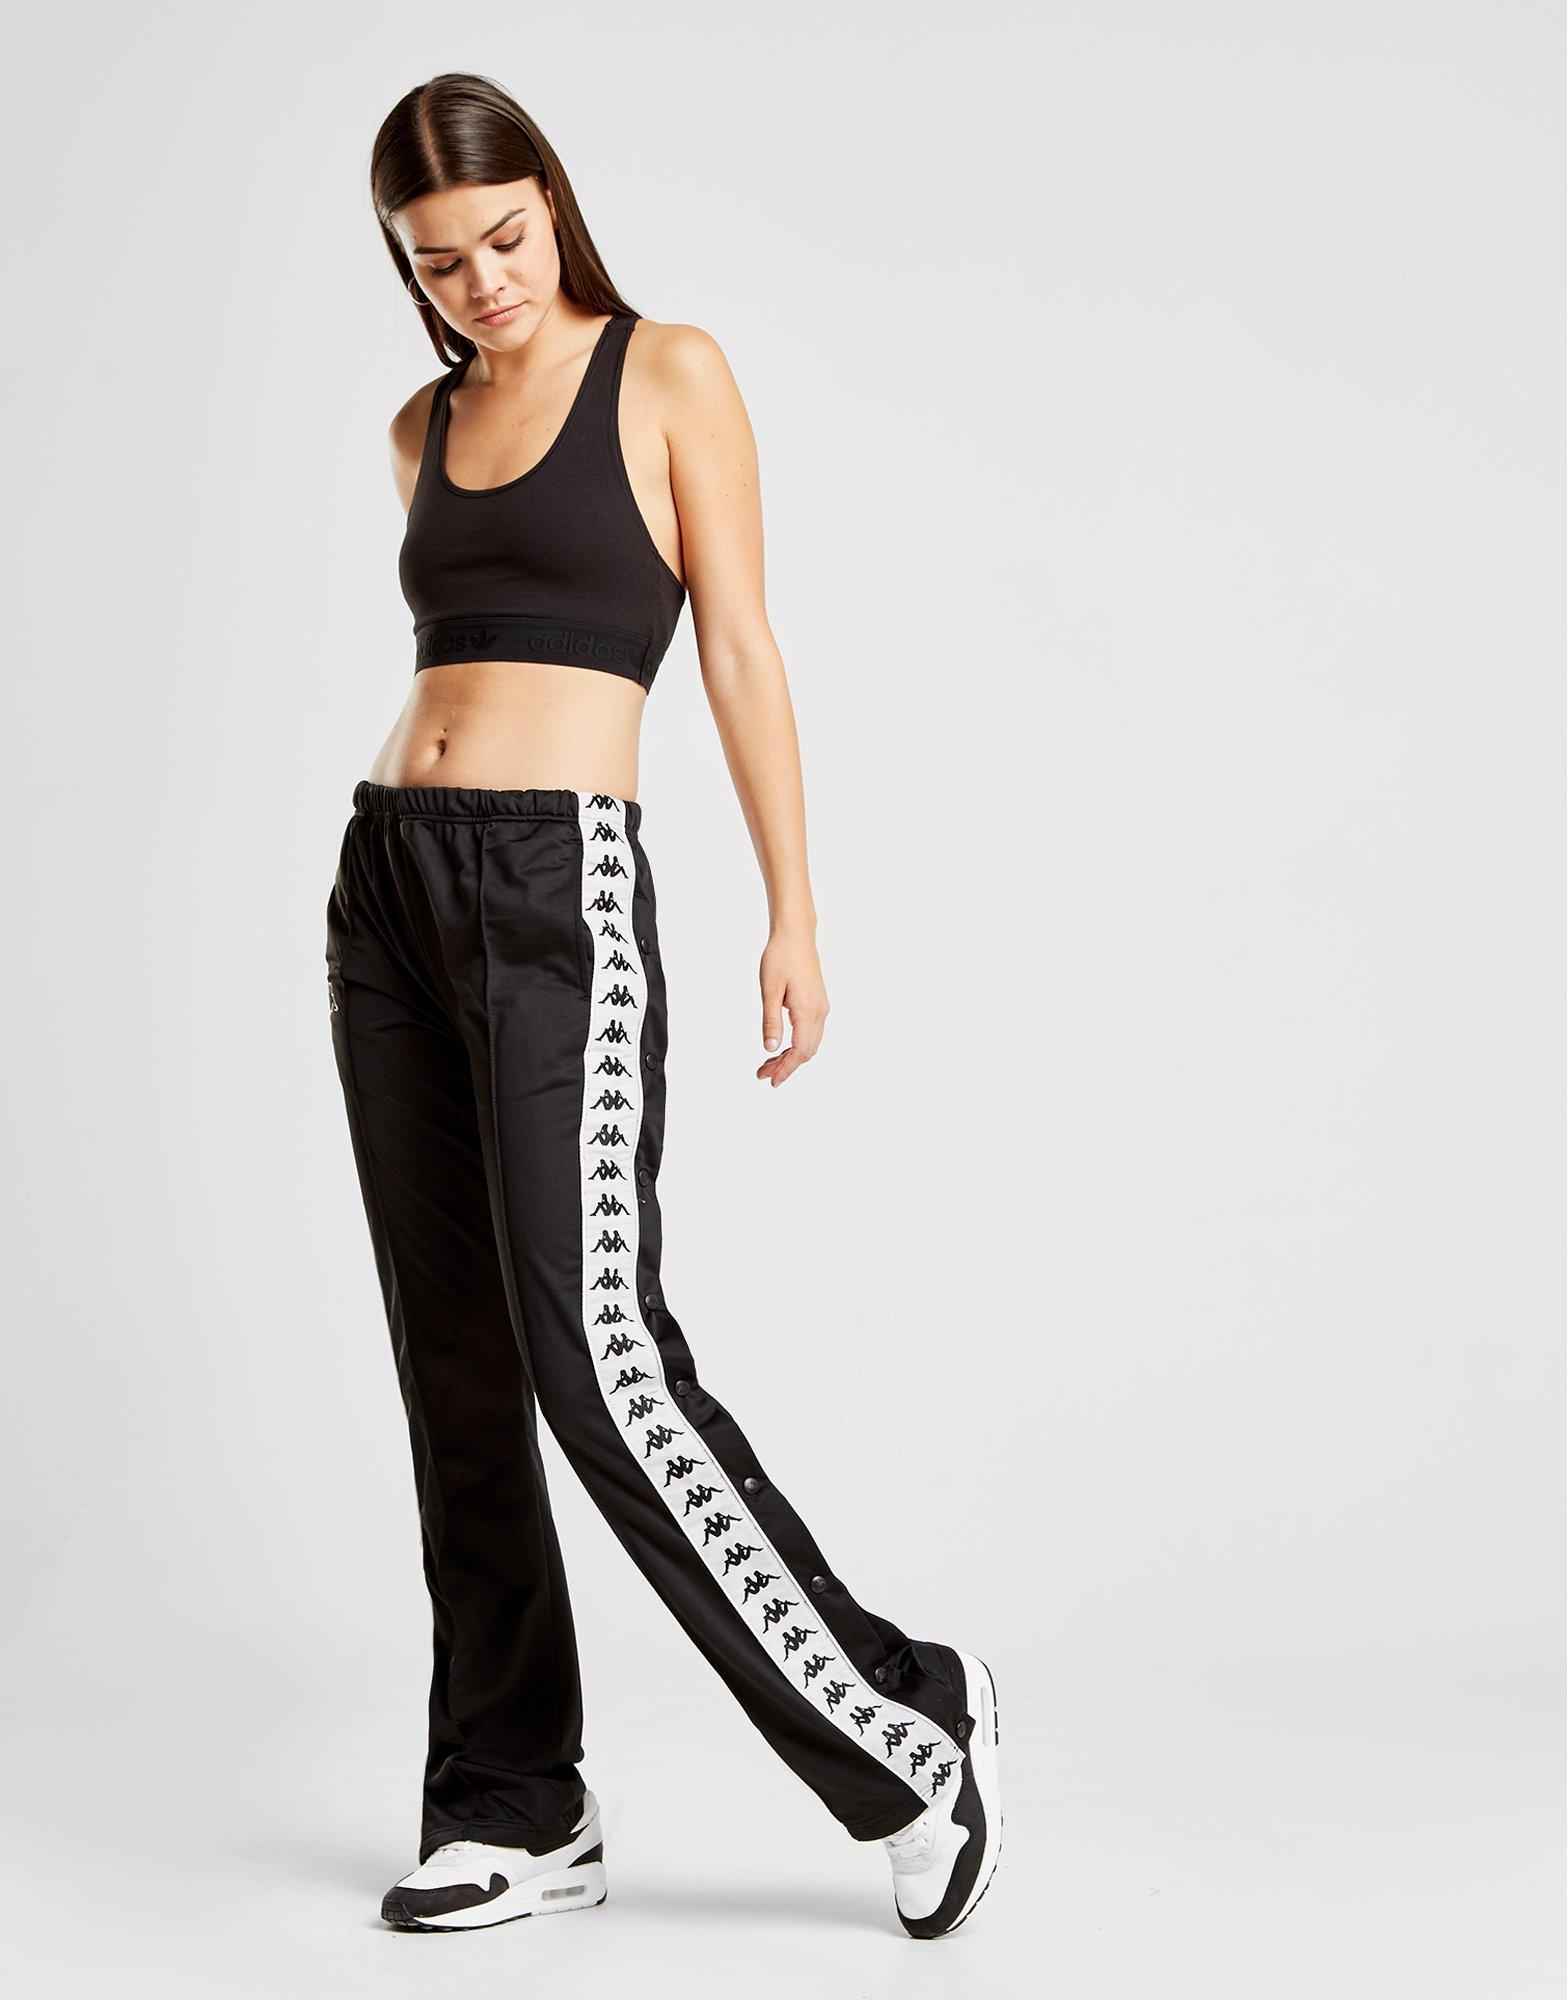 Kappa Astoria Track Pants Womens Flash Sales, UP TO 61% OFF |  www.realliganaval.com